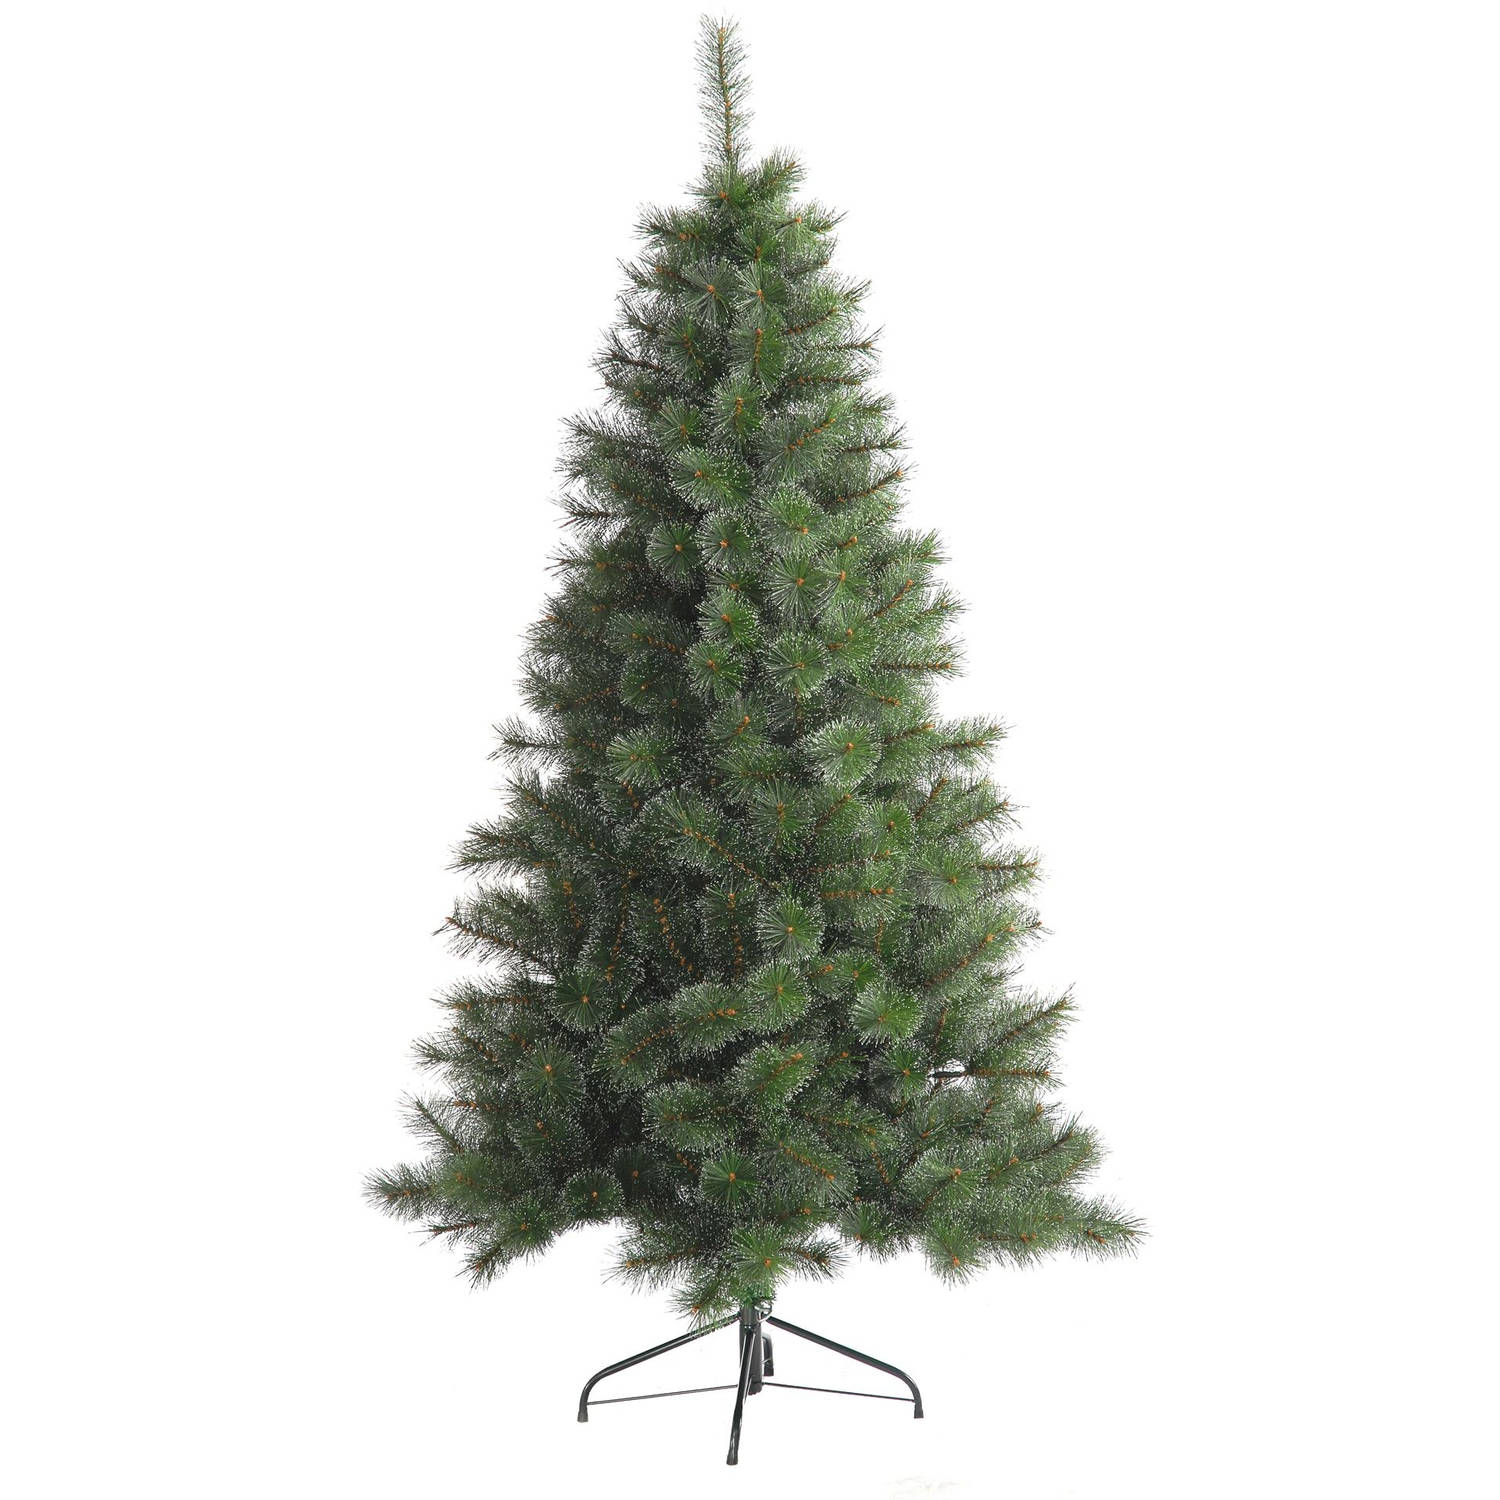 Frosted Alpine kunstkerstboom - 210 cm - groen - frosted - Ø 115 cm - 792 tips - metalen voet